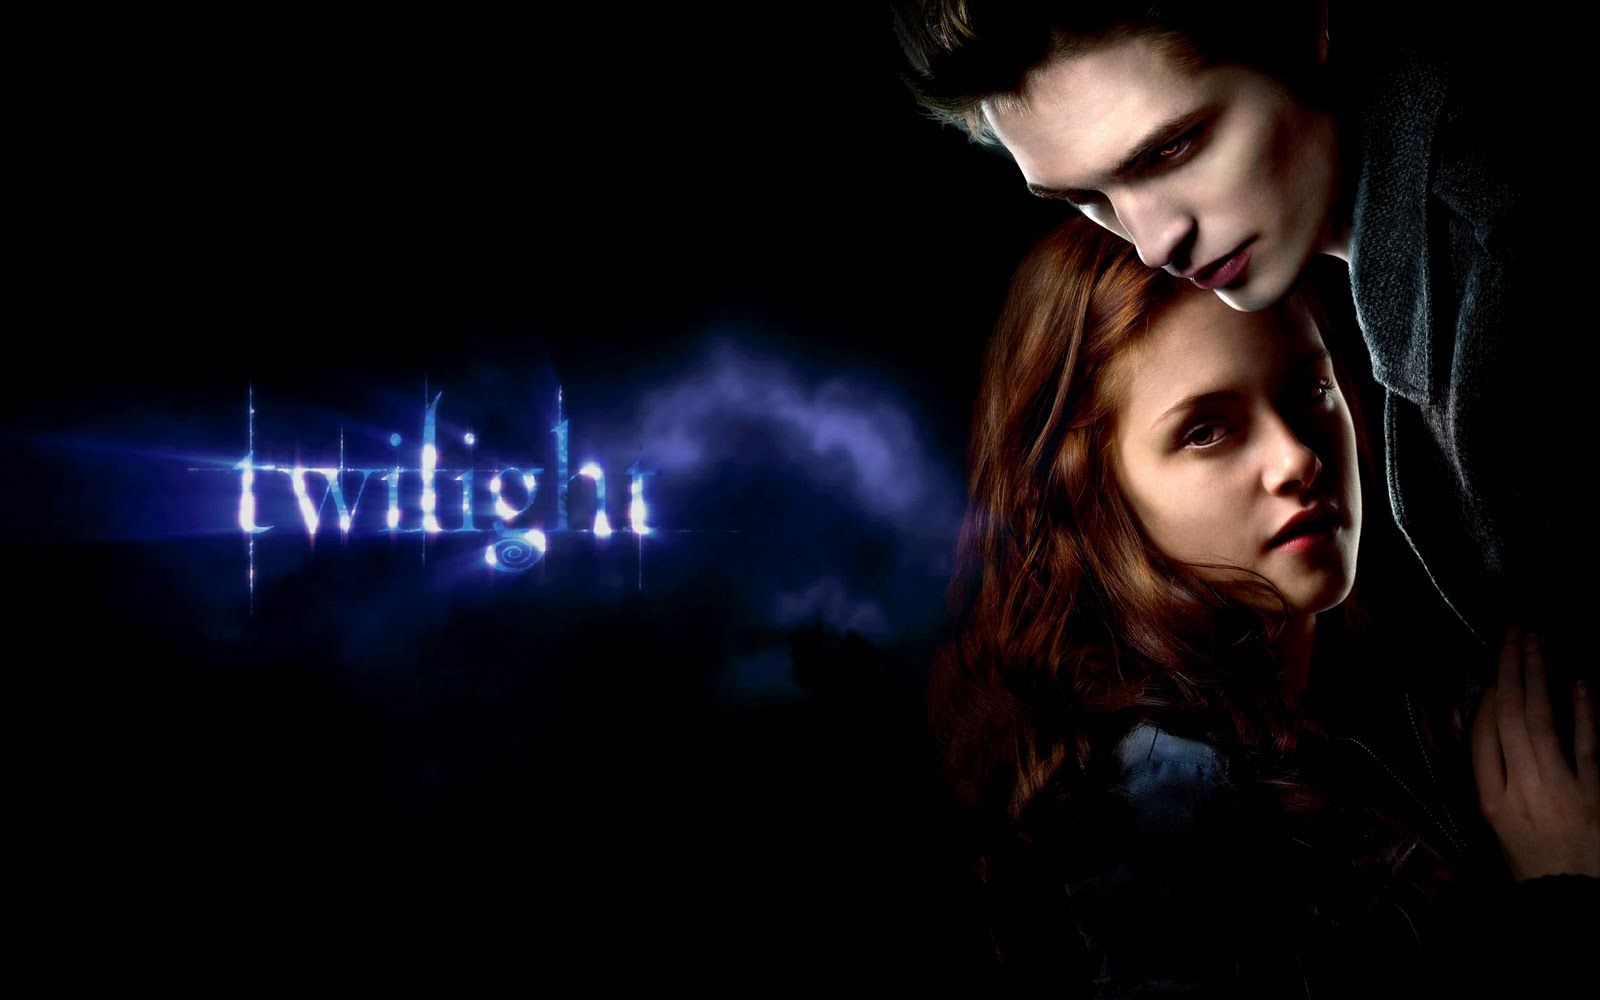 Twilight Desktop Background. Twilight Princess Wallpaper, Twilight Sky Wallpaper and Twilight Wallpaper